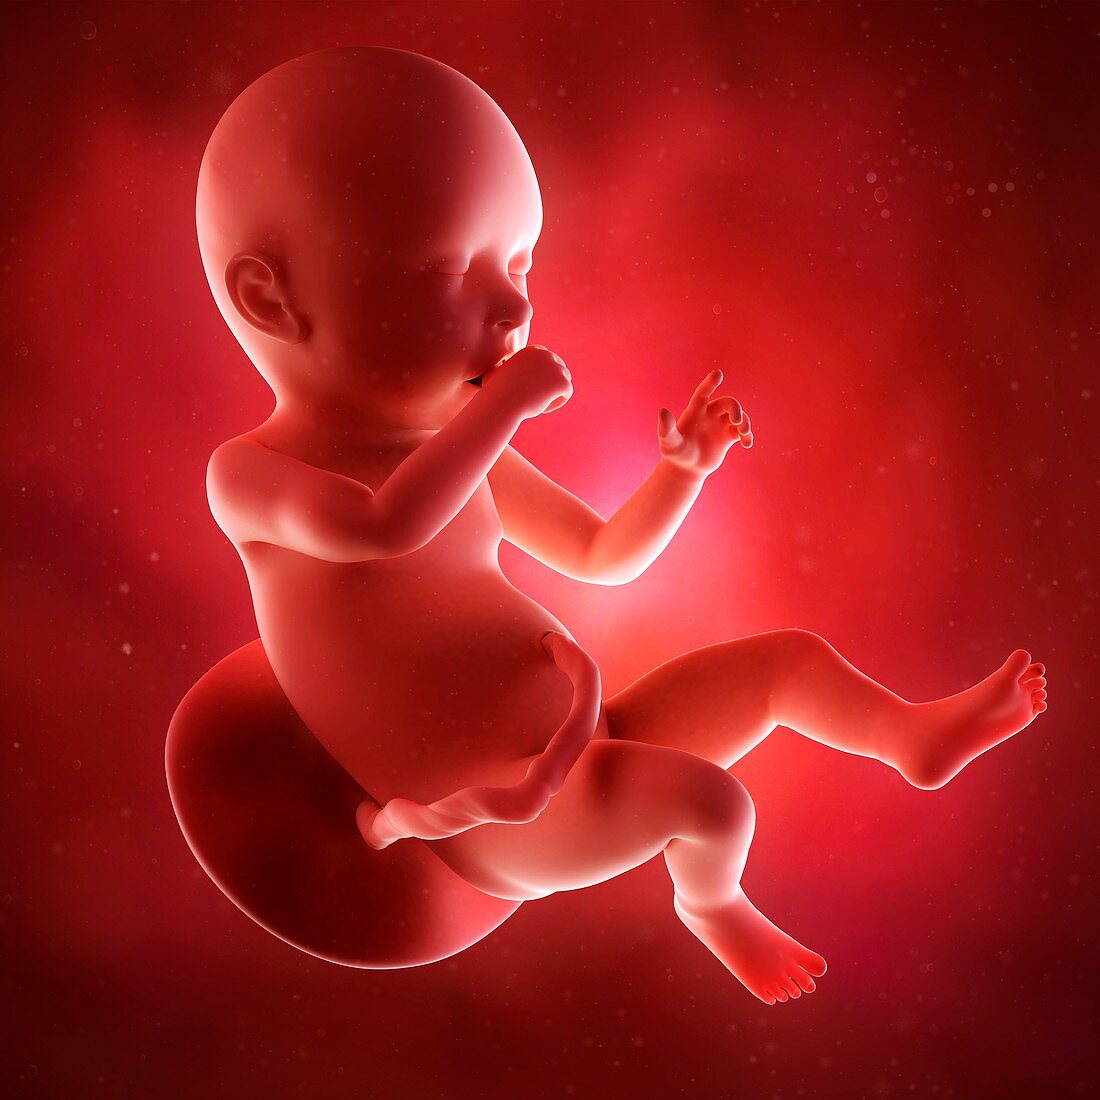 Human fetus age 40 weeks